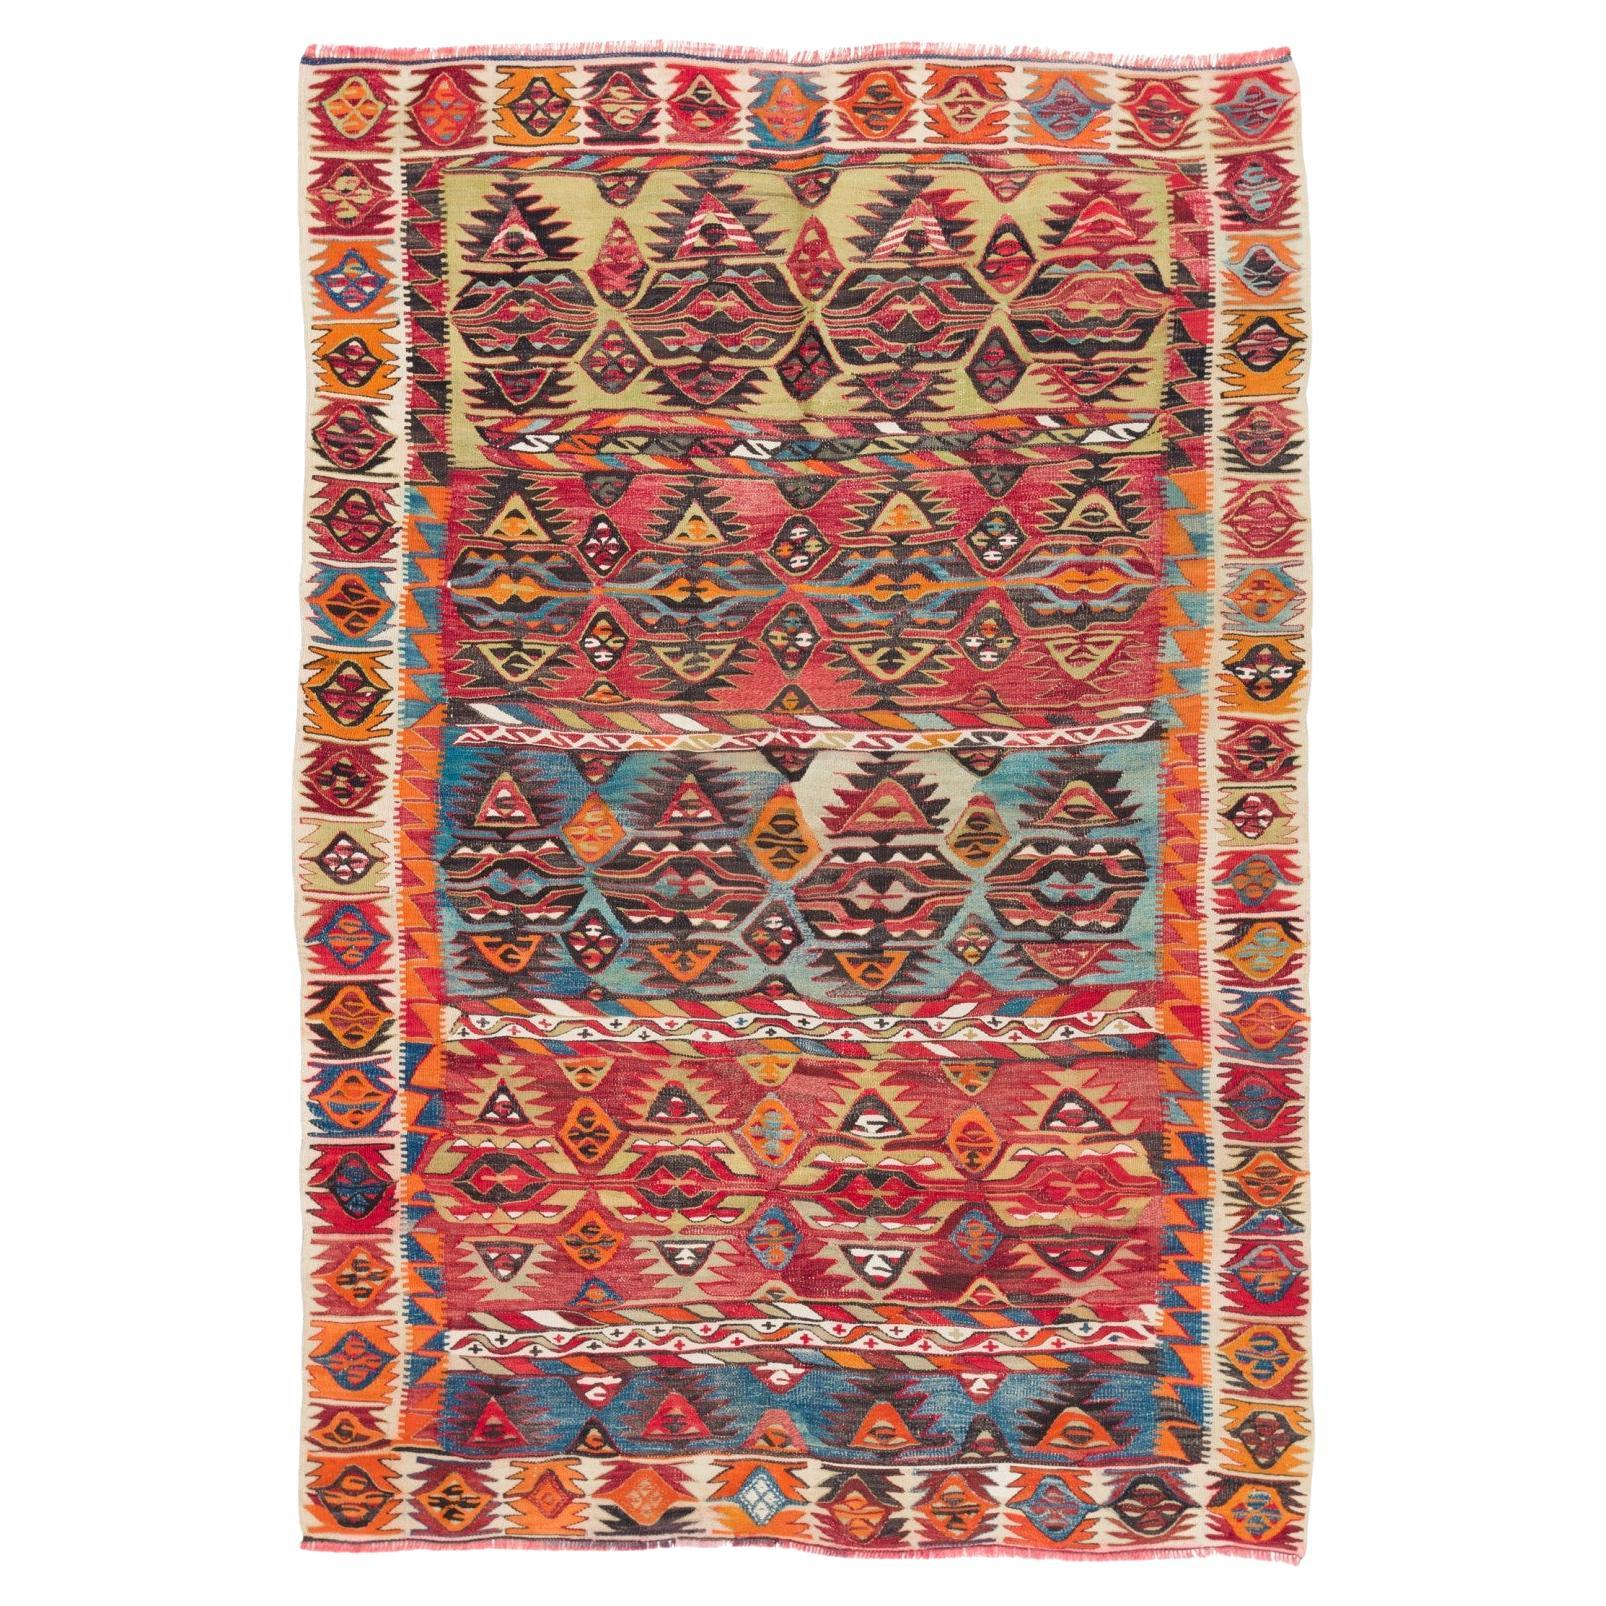 Antique Konya Hotamis Kilim Rug Wool Old Central Anatolian Turkish Carpet